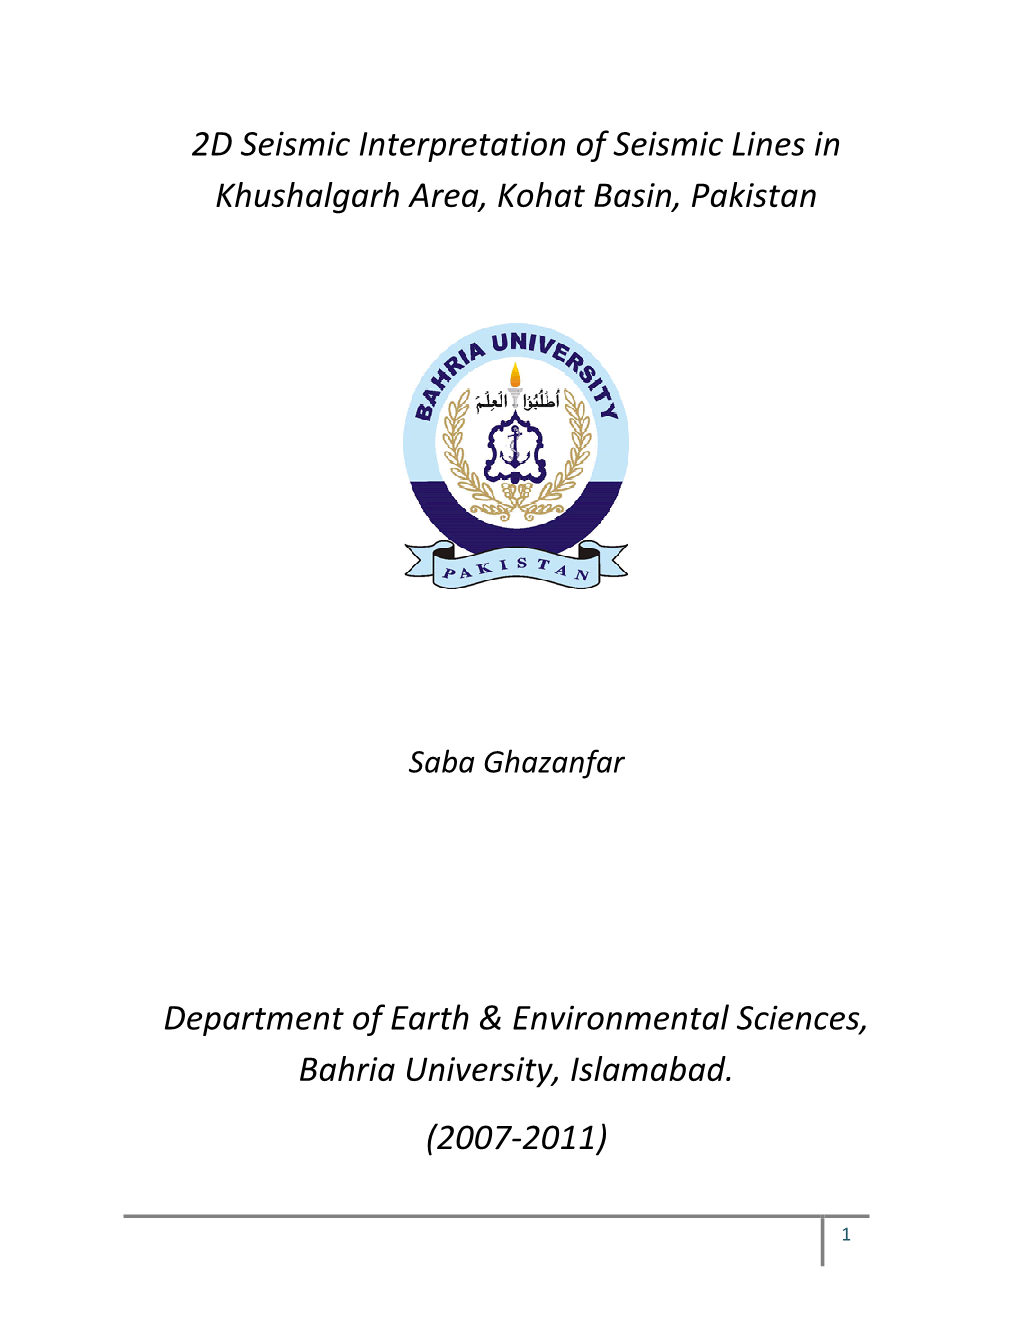 2D Seismic Interpretation of Seismic Lines in Khushalgarh Area, Kohat Basin, Pakistan